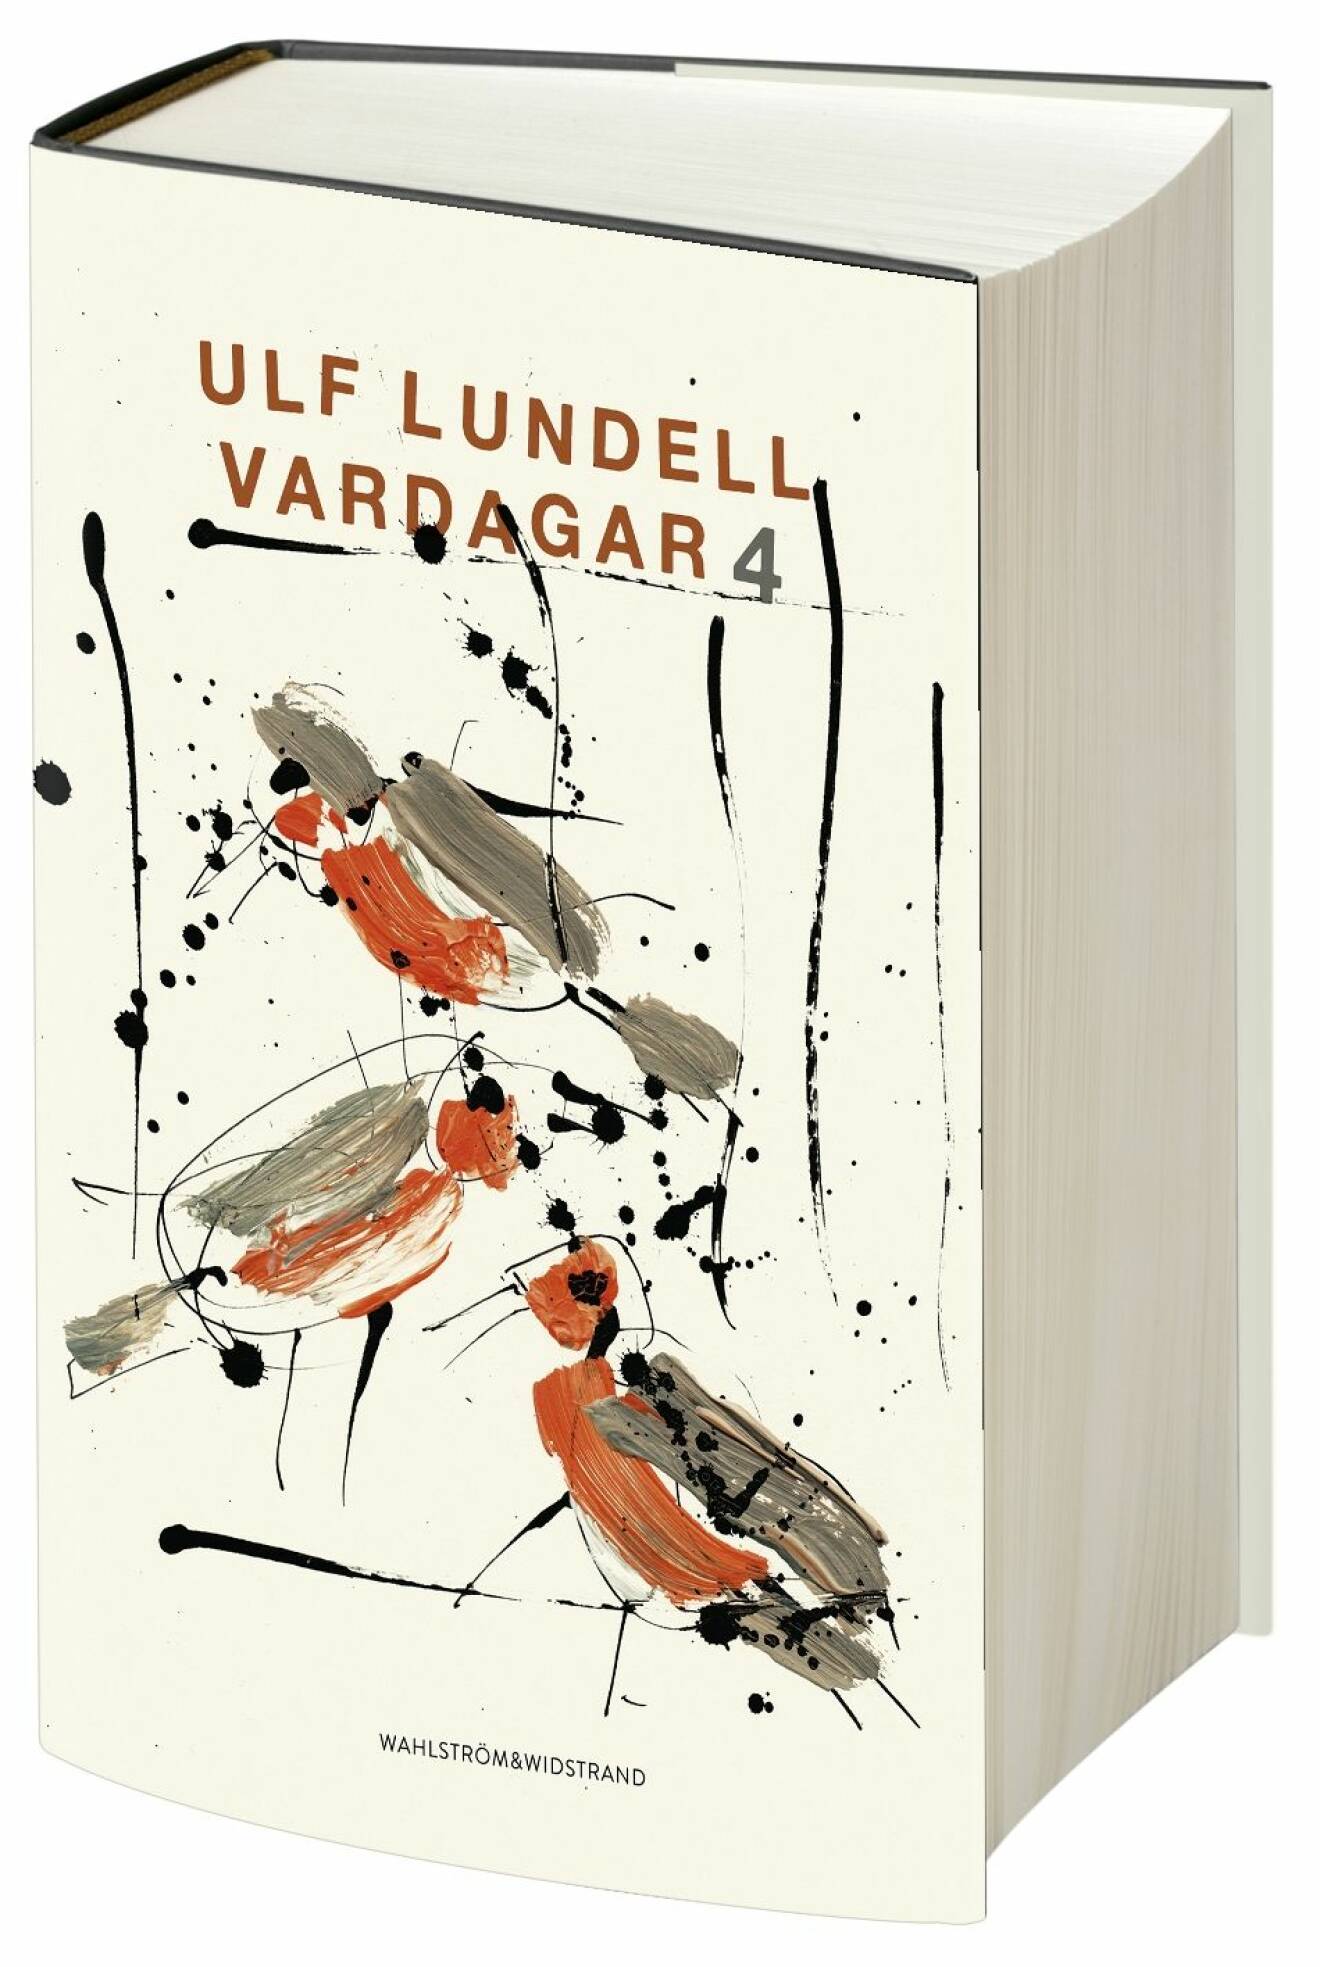 Vardagar 4, Ulf Lundell